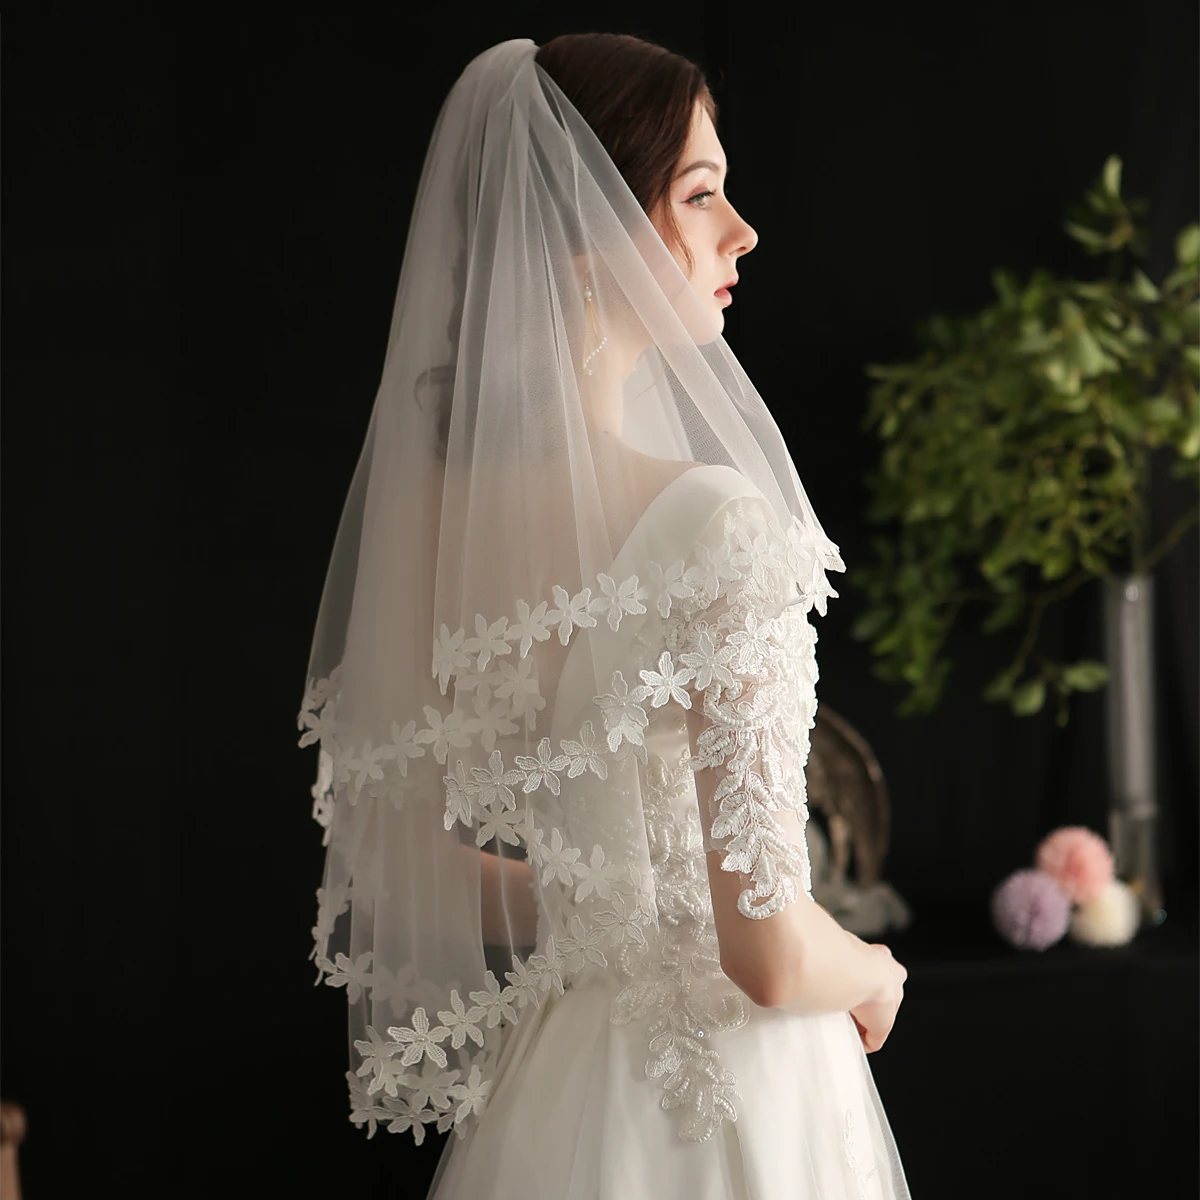 

Headdress Bridal Veils Pearls Bride Wedding Veil White 2T Elbow Flower Lace+Comb Two Layers Elbow Length Veil Applique Edge